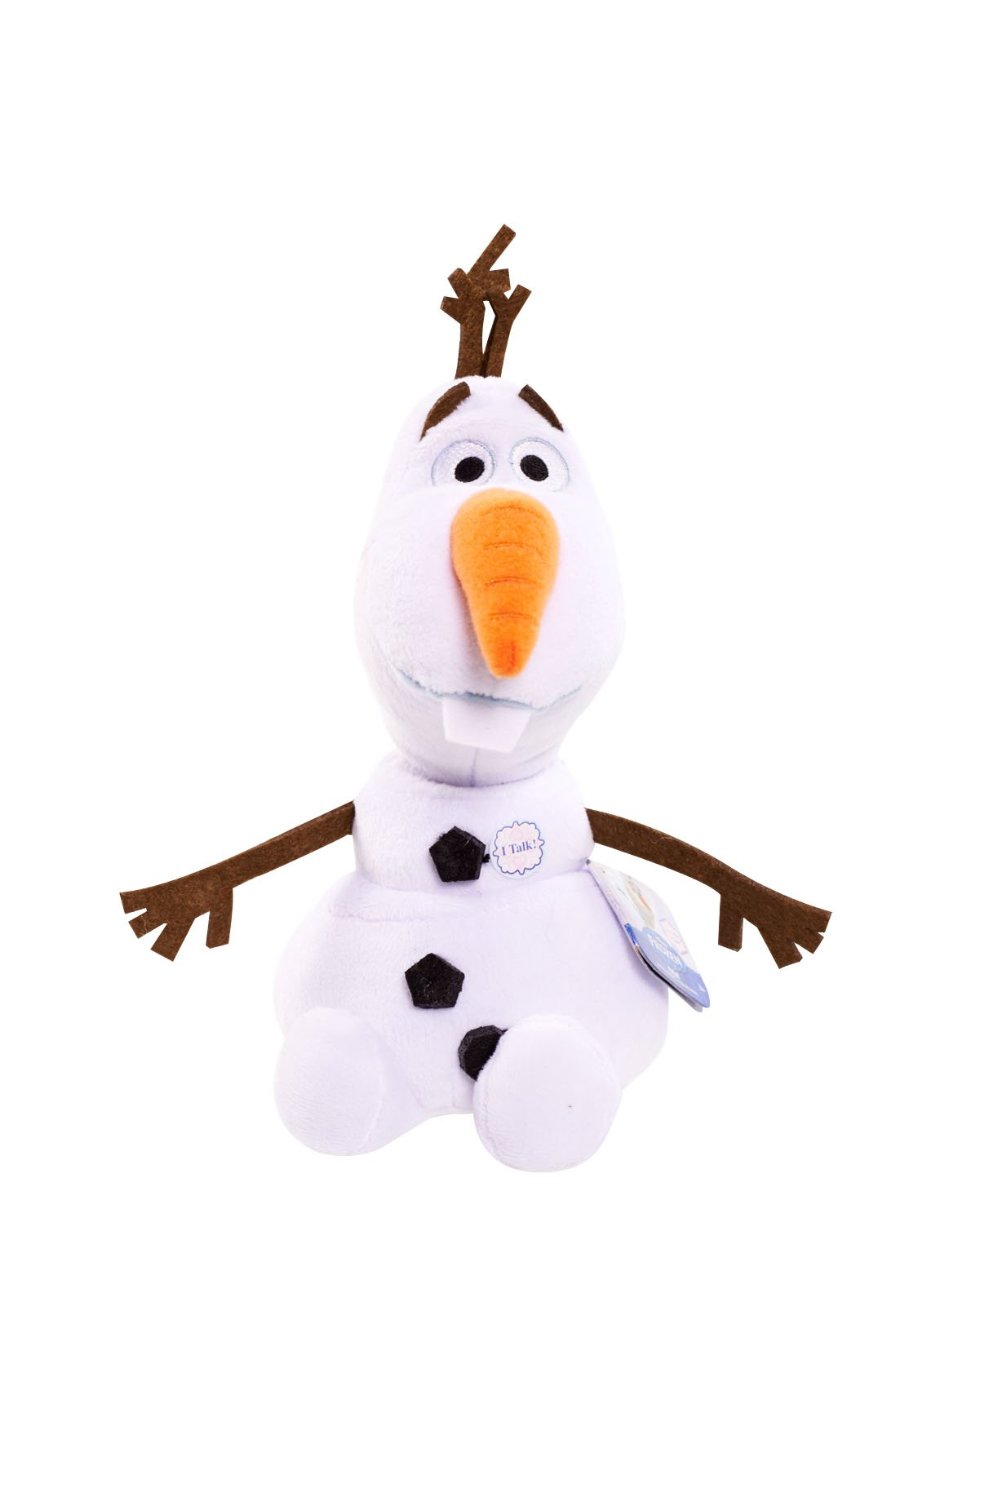 Disney Frozen Bean Olaf Plush Only $4.73! (reg. $11.99) - Become a ...